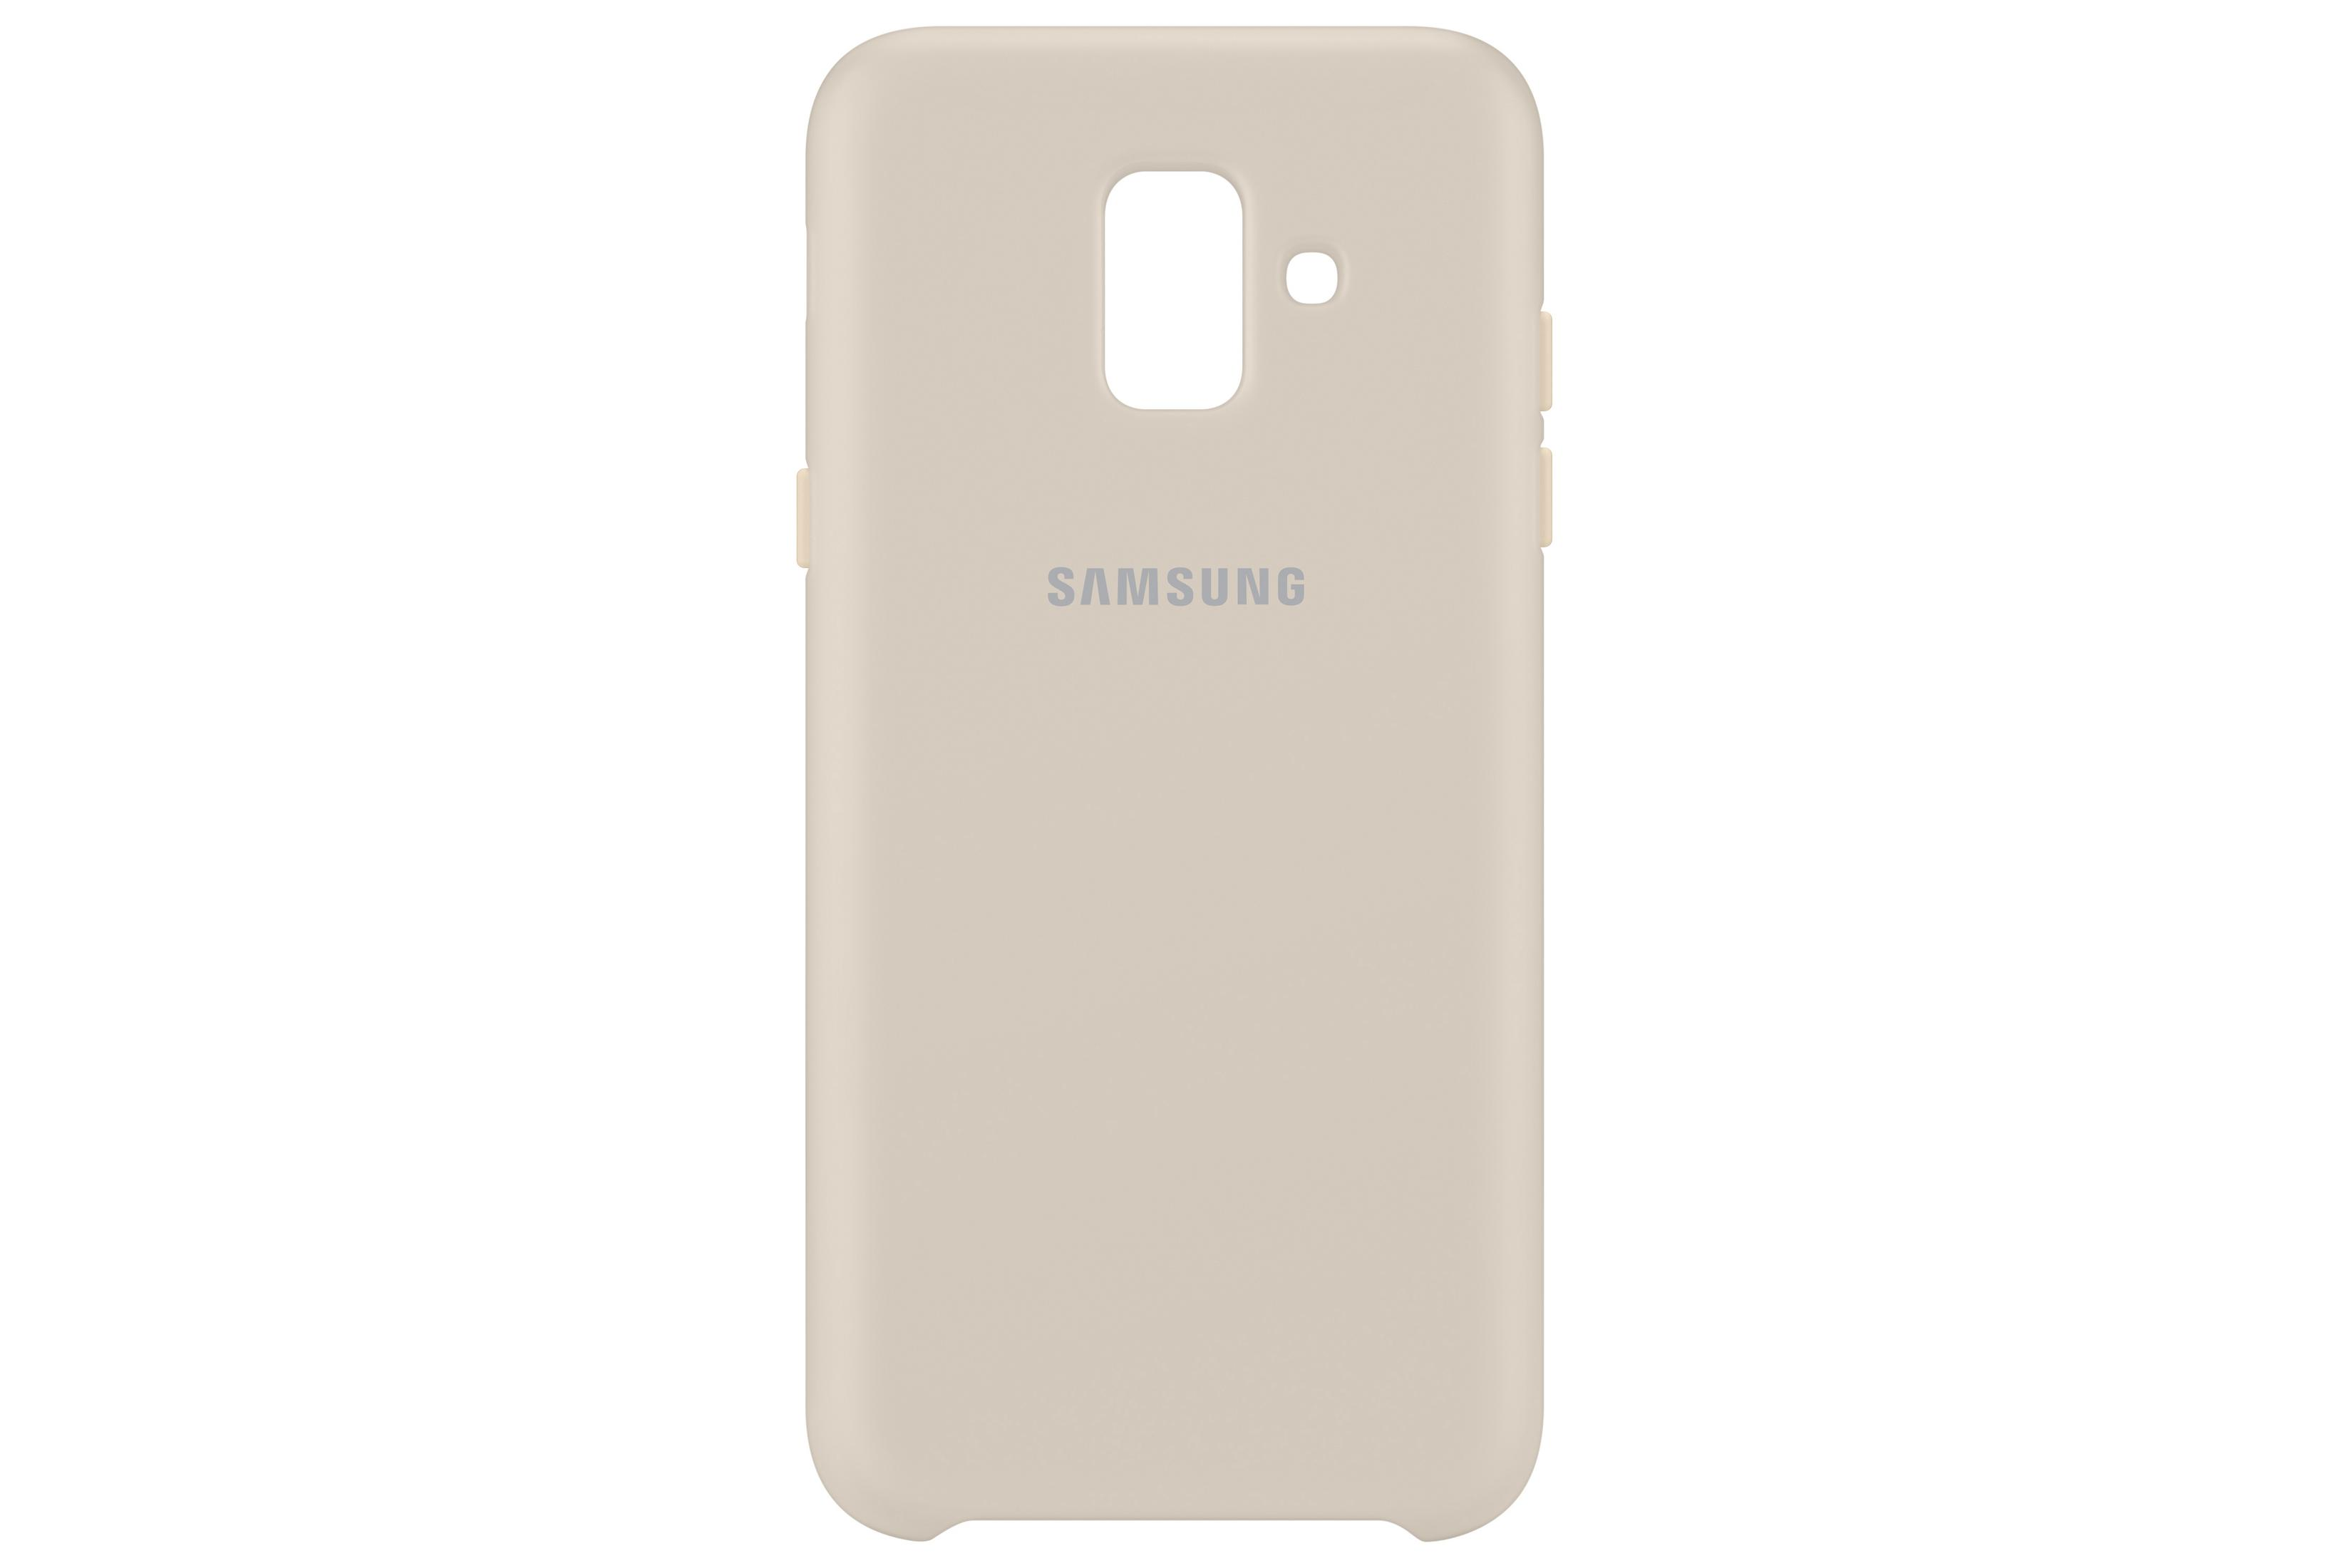 A6, SAMSUNG GALAXY Backcover, F. Galaxy EF-PA600 DUAL A6 LAYER Gold GOLD, Samsung,